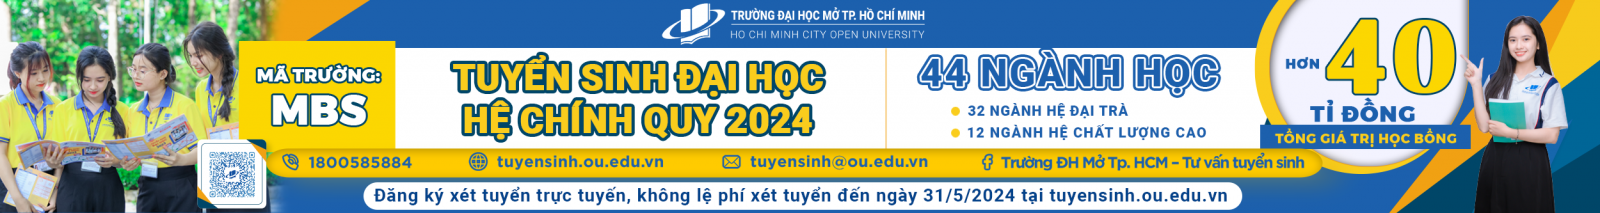 OU- TS ĐH 2024- trang chu web